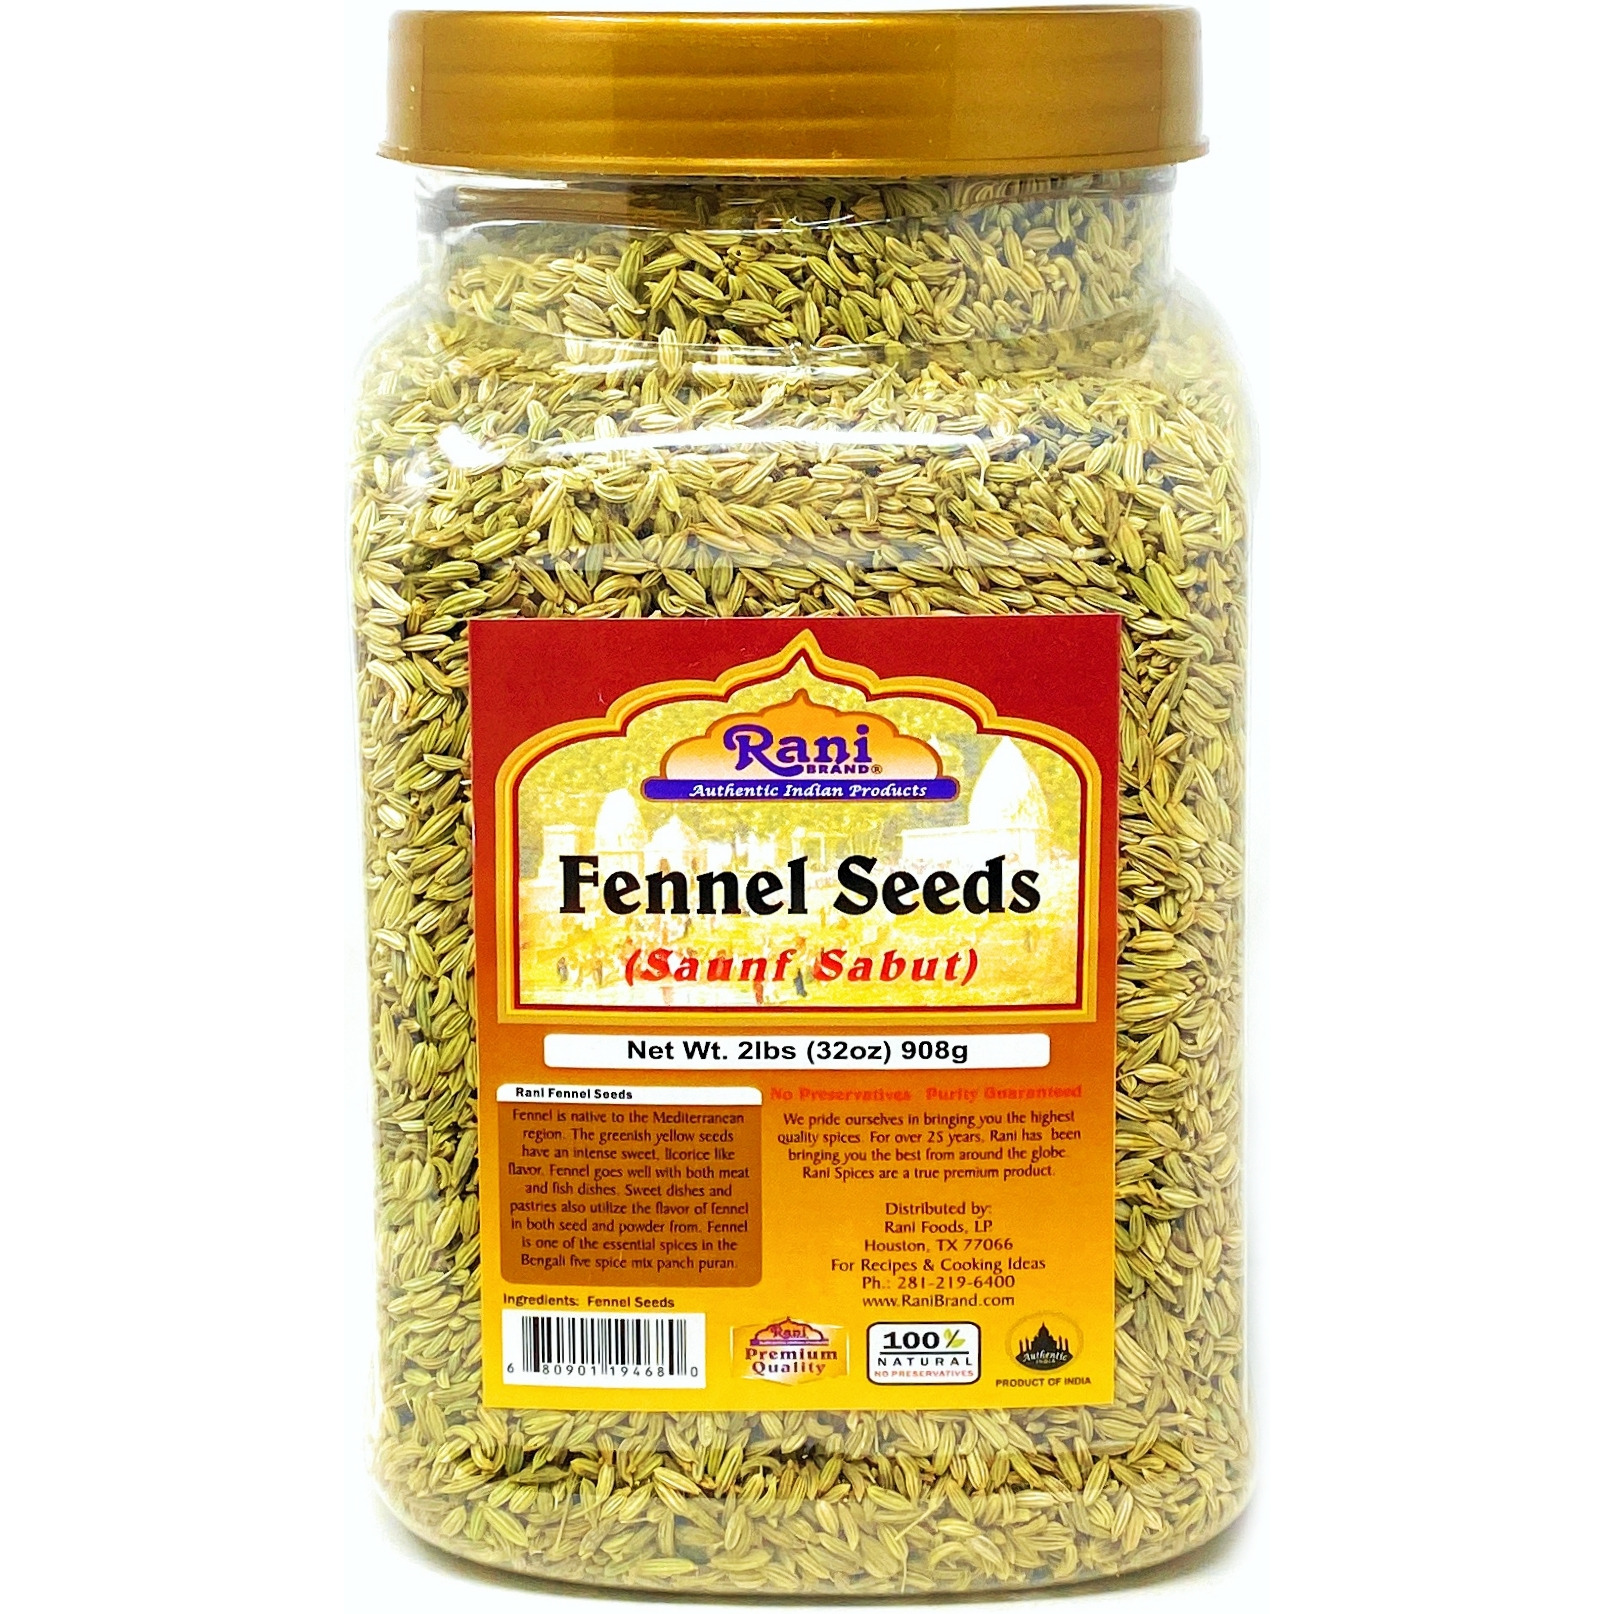 Rani Fennel (Saunf) Seeds Whole, Indian Spice 2lbs (32oz) PET Jar, All Natural ~ Gluten Friendly | NON-GMO | Vegan | Indian Origin